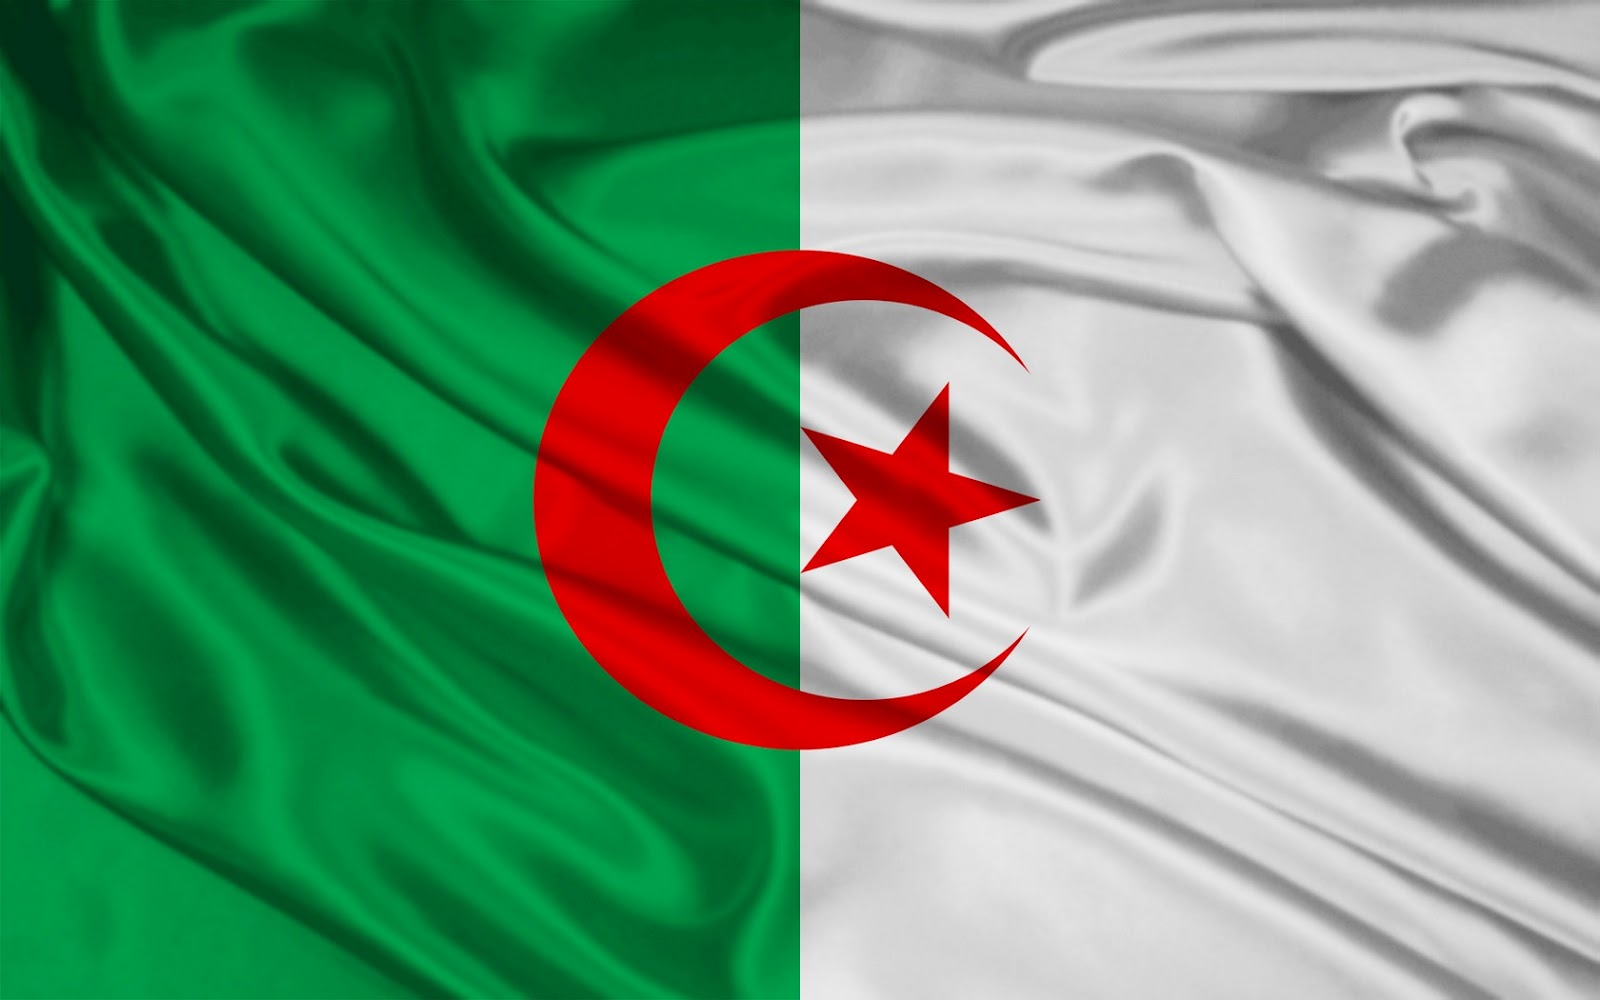 https://blogger.googleusercontent.com/img/b/R29vZ2xl/AVvXsEgLQq2W8_uAKfc6UMpRCDoFIOSbAQWa96uA7G2QyP7oca4Kypaxs7OF1clKkoiMWfynazm0VKWJi2nutTCaaR8UCFszar07cc33KcAZfZNZyO1eo5d-S7xpfvb9C0U60lZ5Aqp8NkjCtIU/s1600/Algeria-Flag-Wallpapers-1680x1050.jpg